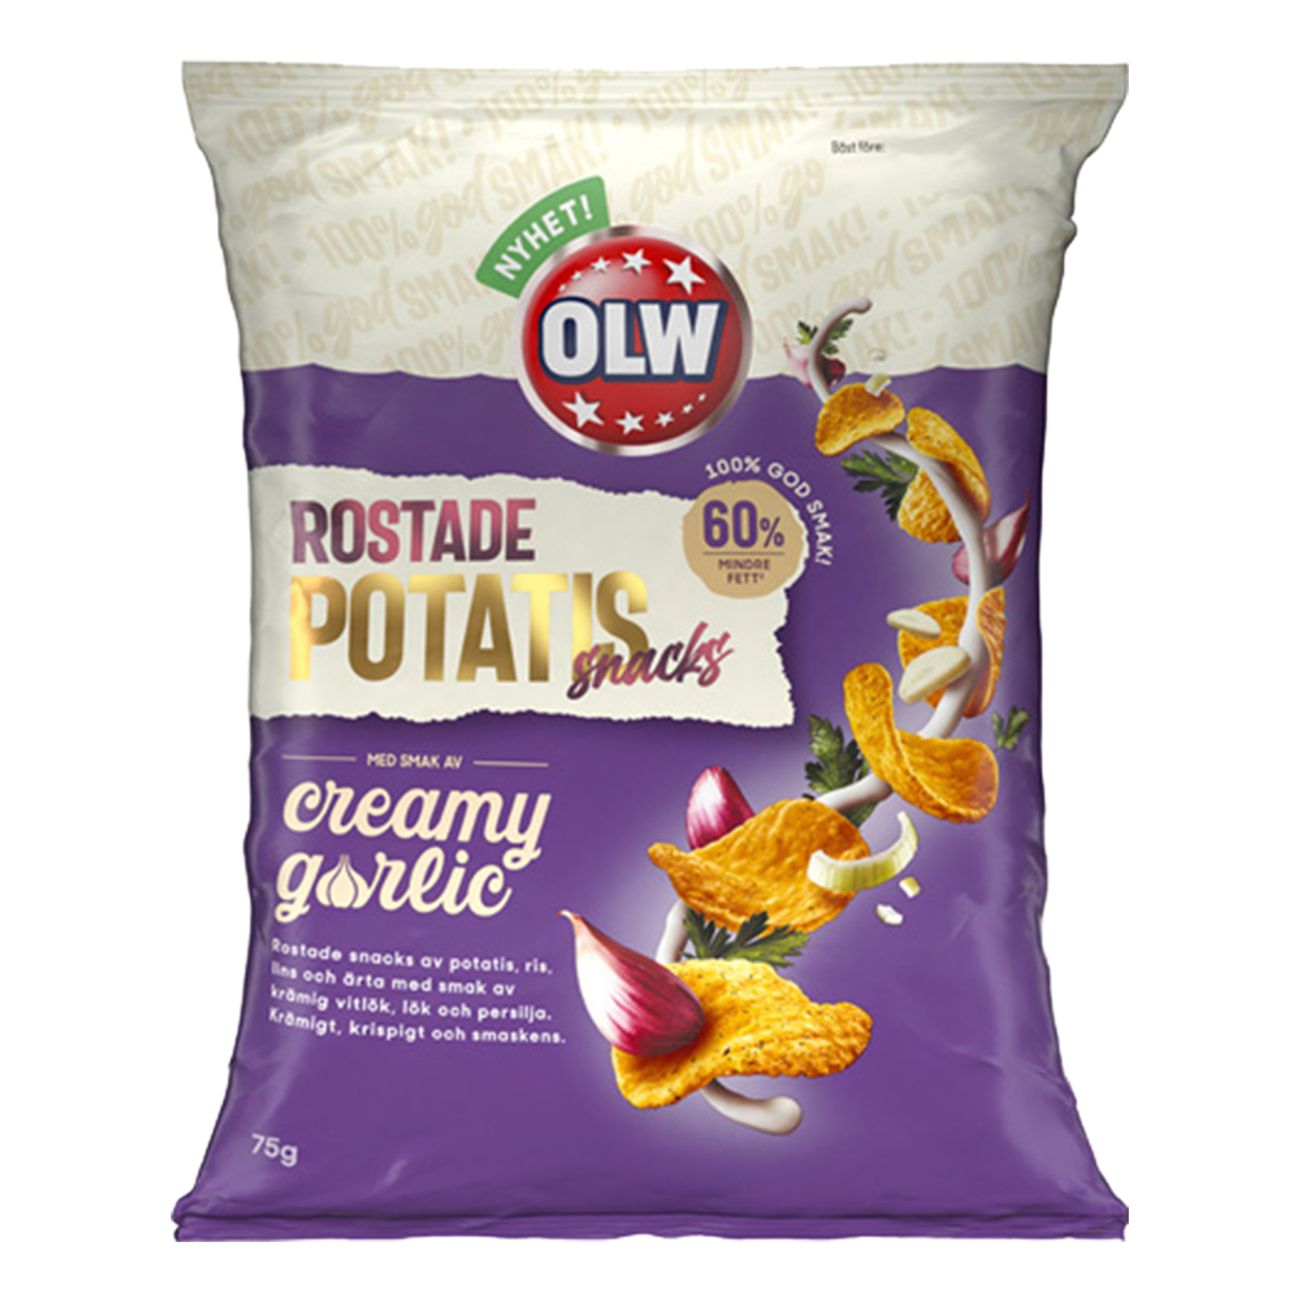 olw-rostade-potatissnacks-creamy-garlic-92478-1